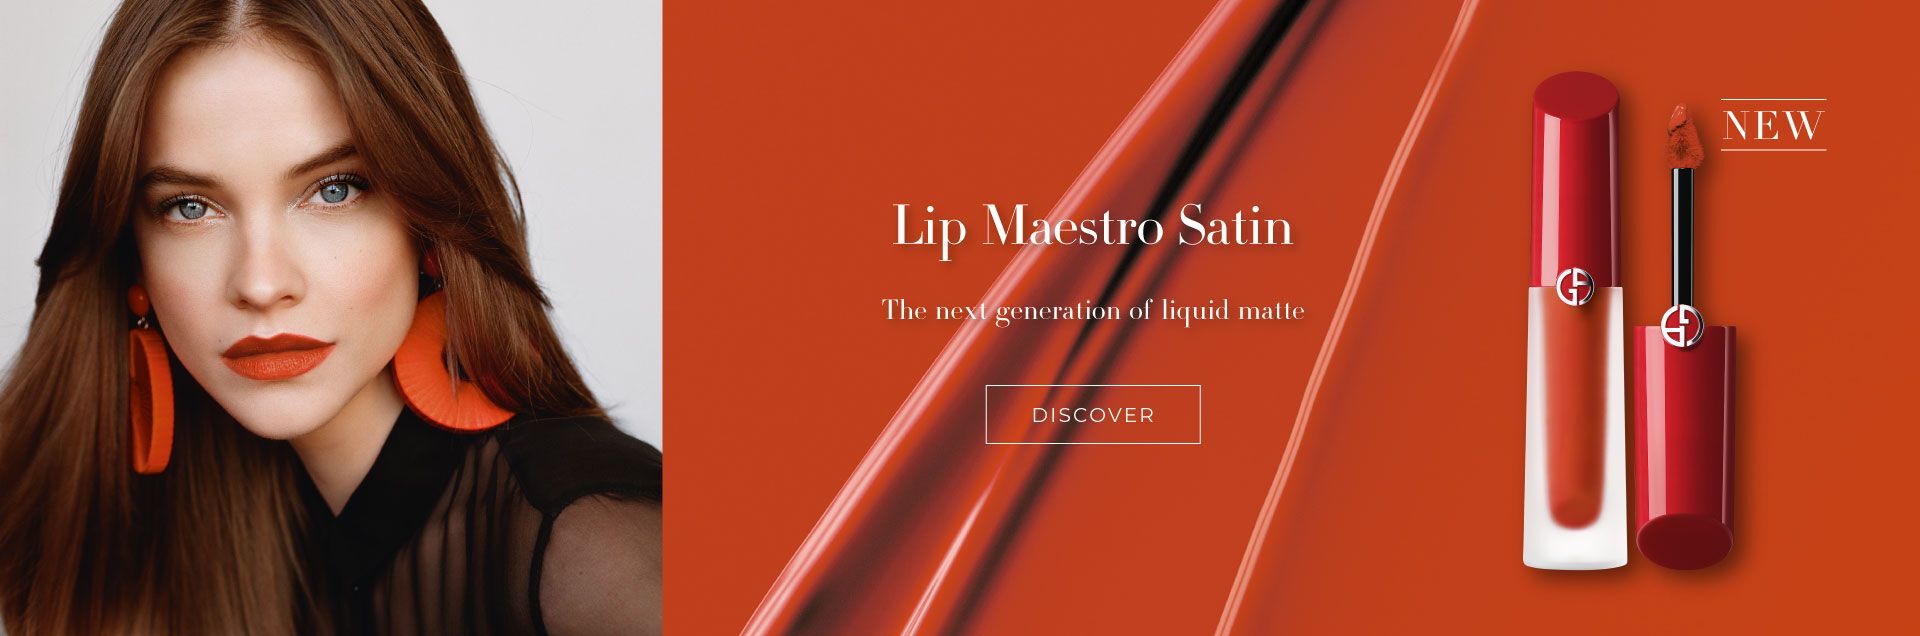 Lip Maestro Satin